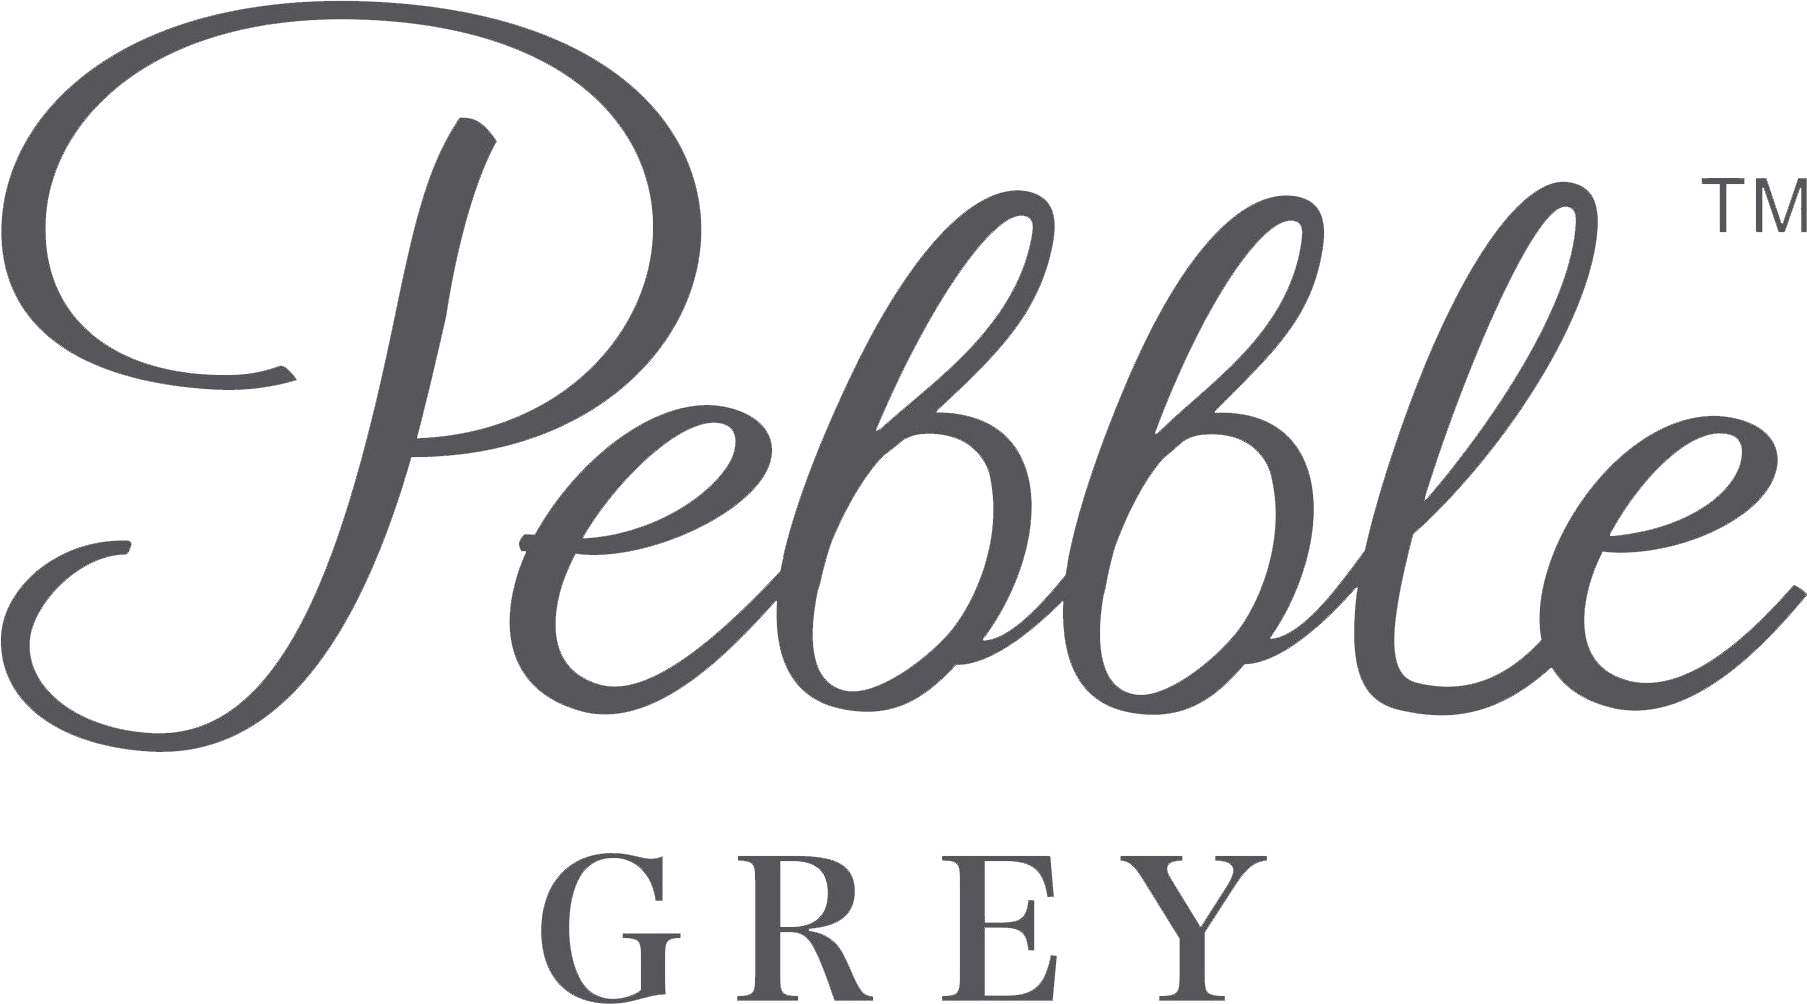 Pebble Grey Logo